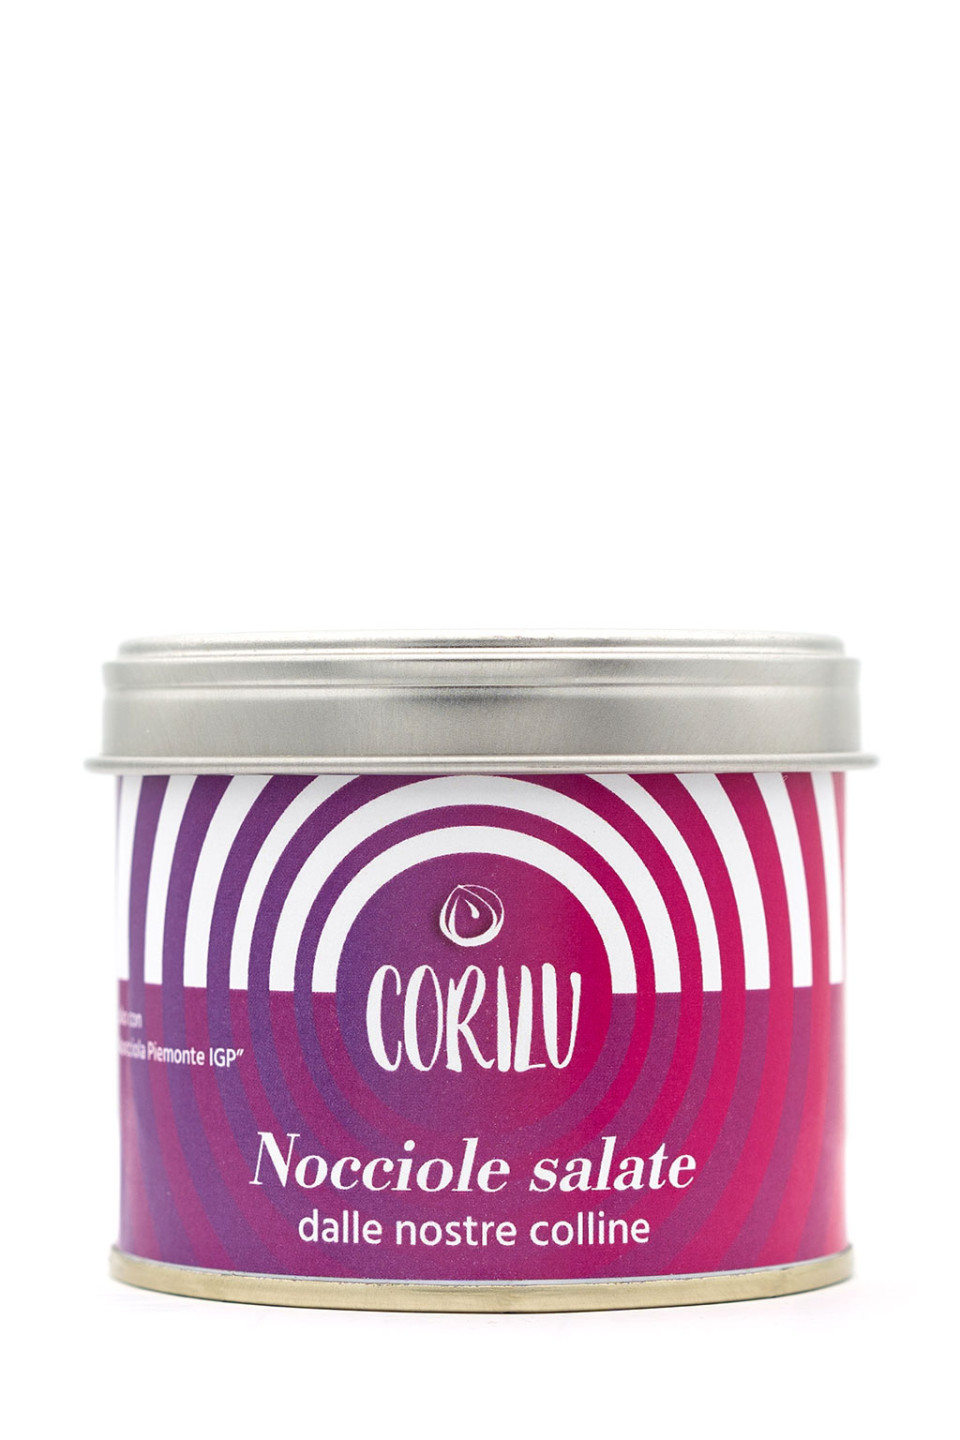 Nocciole salate Corilu_MAIN.jpg